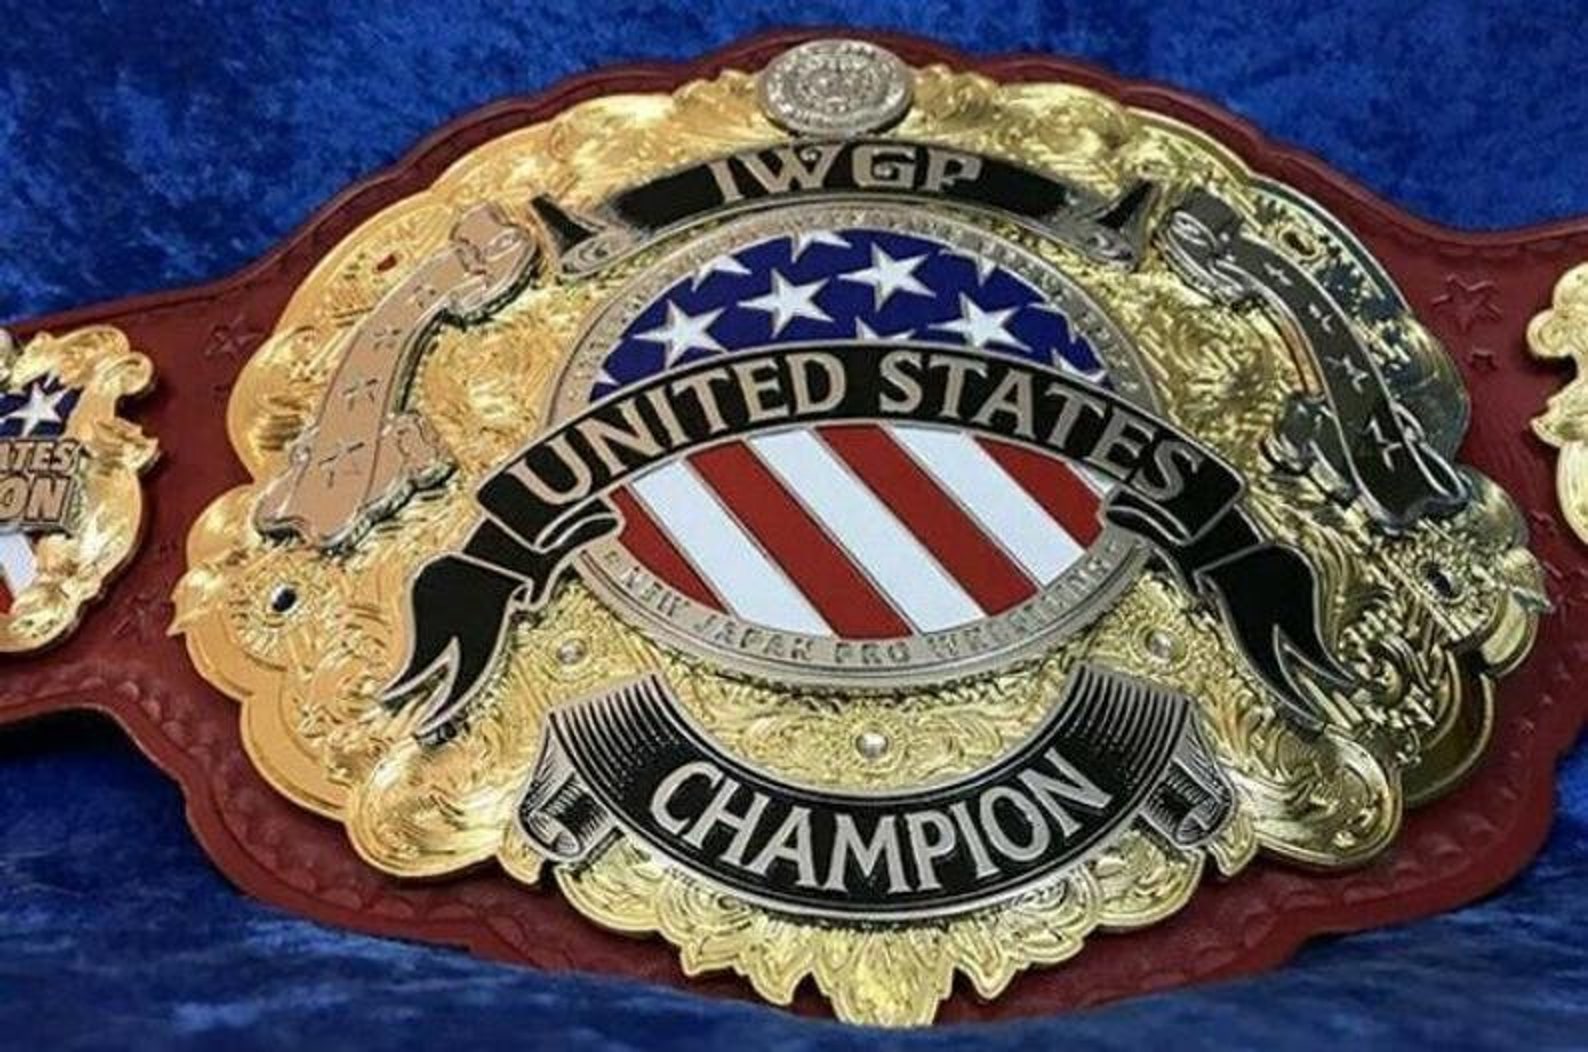 IWGP UNITED STATES championship belt adult size replica | Etsy